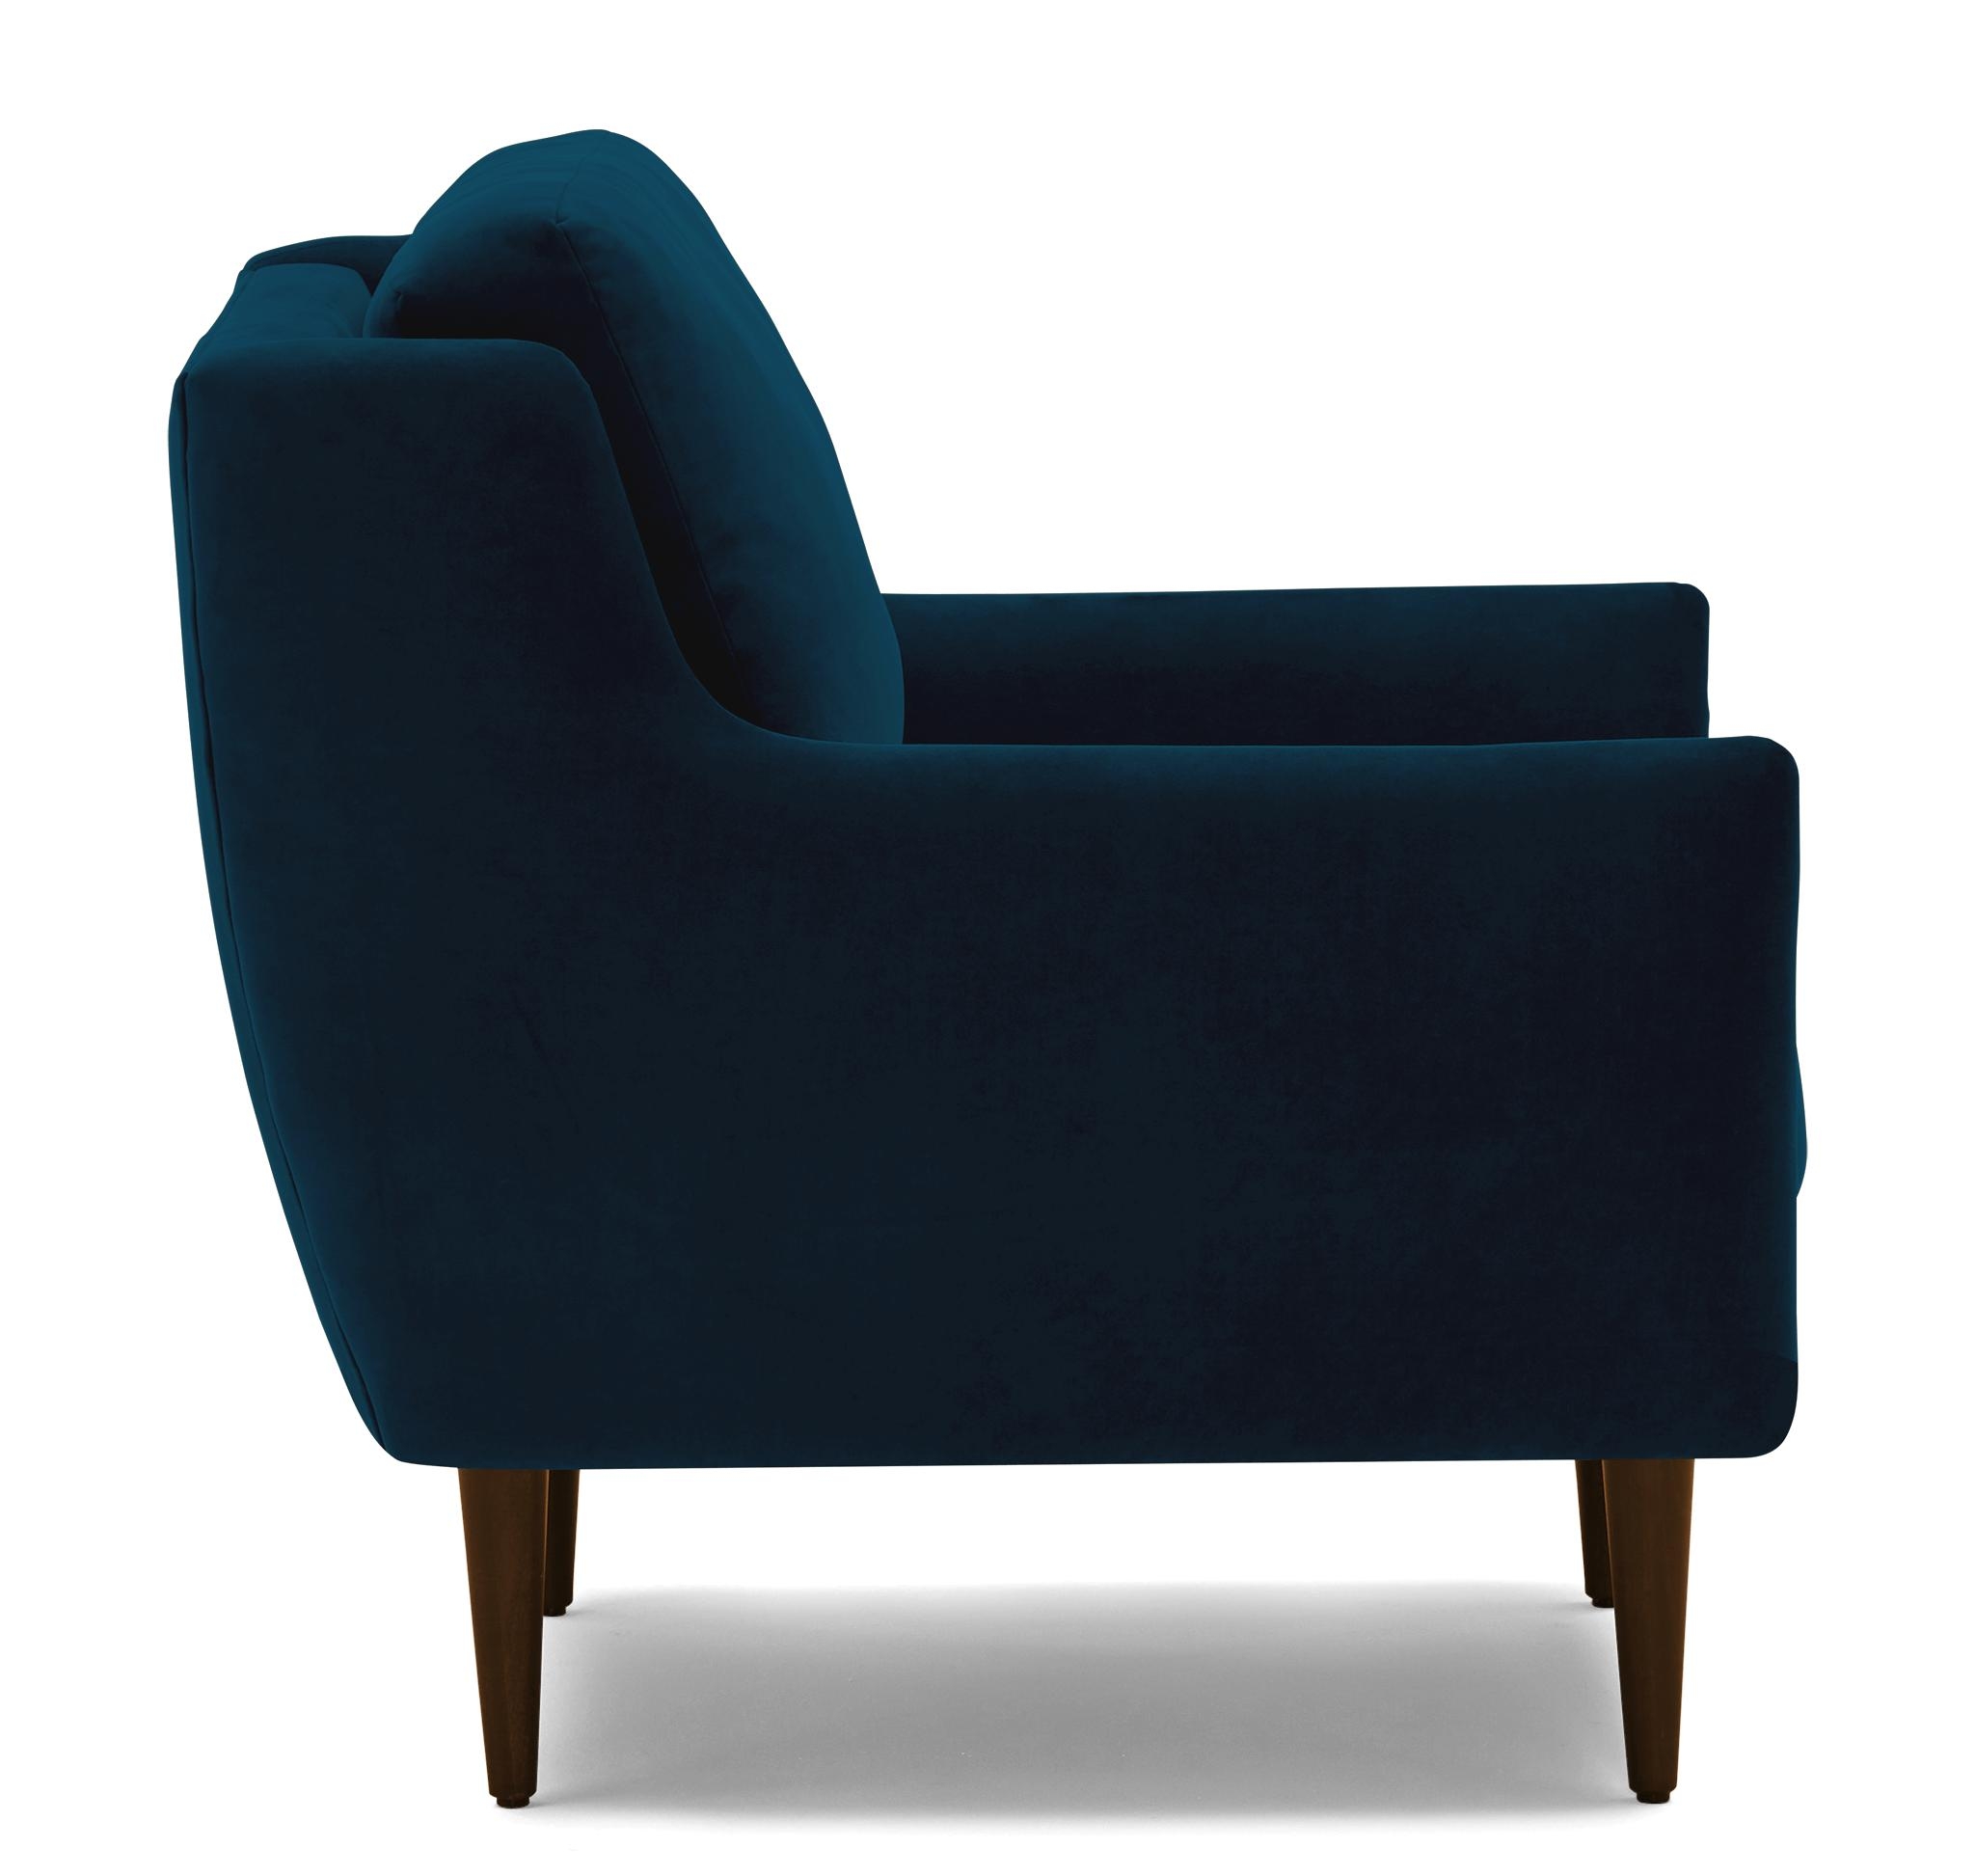 Blue Bell Mid Century Modern Chair - Key Largo Zenith Teal - Mocha - Image 2